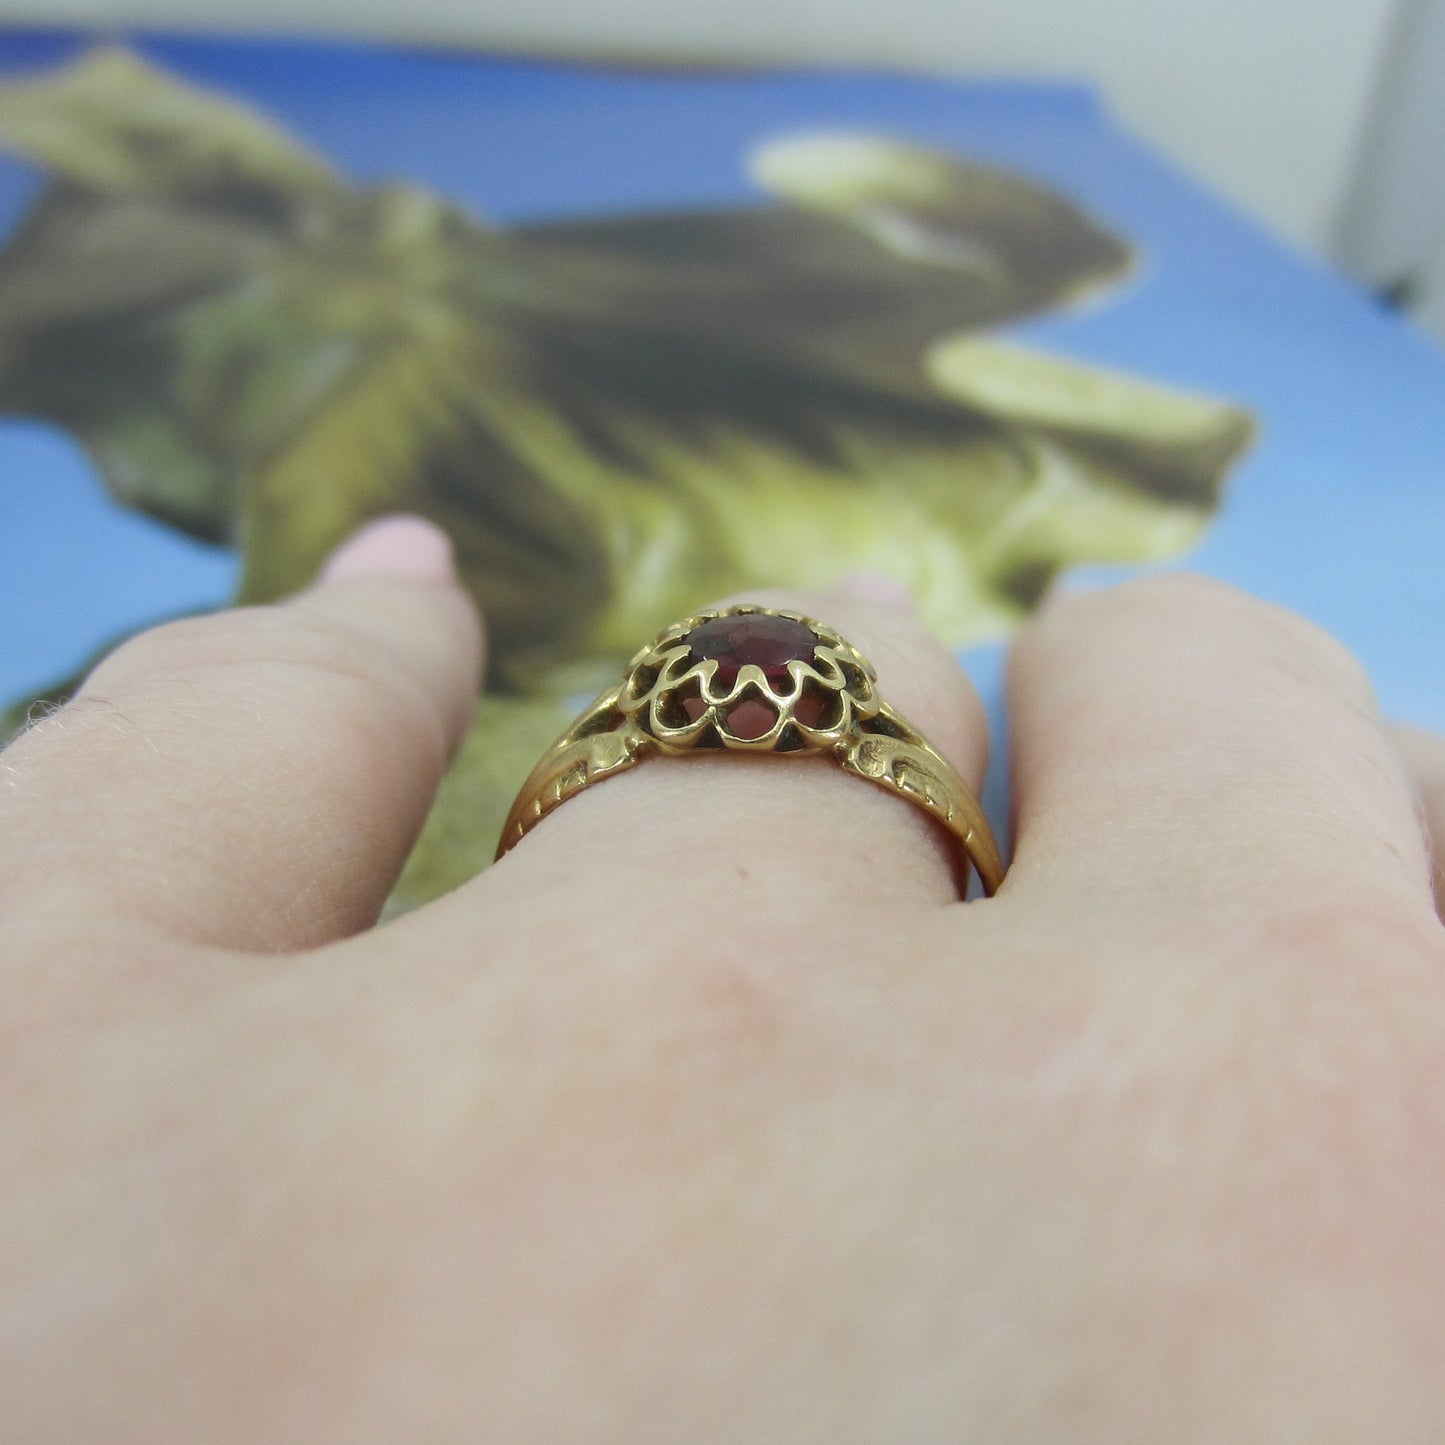 SOLD-Victorian Garnet Ring 14k c. 1880